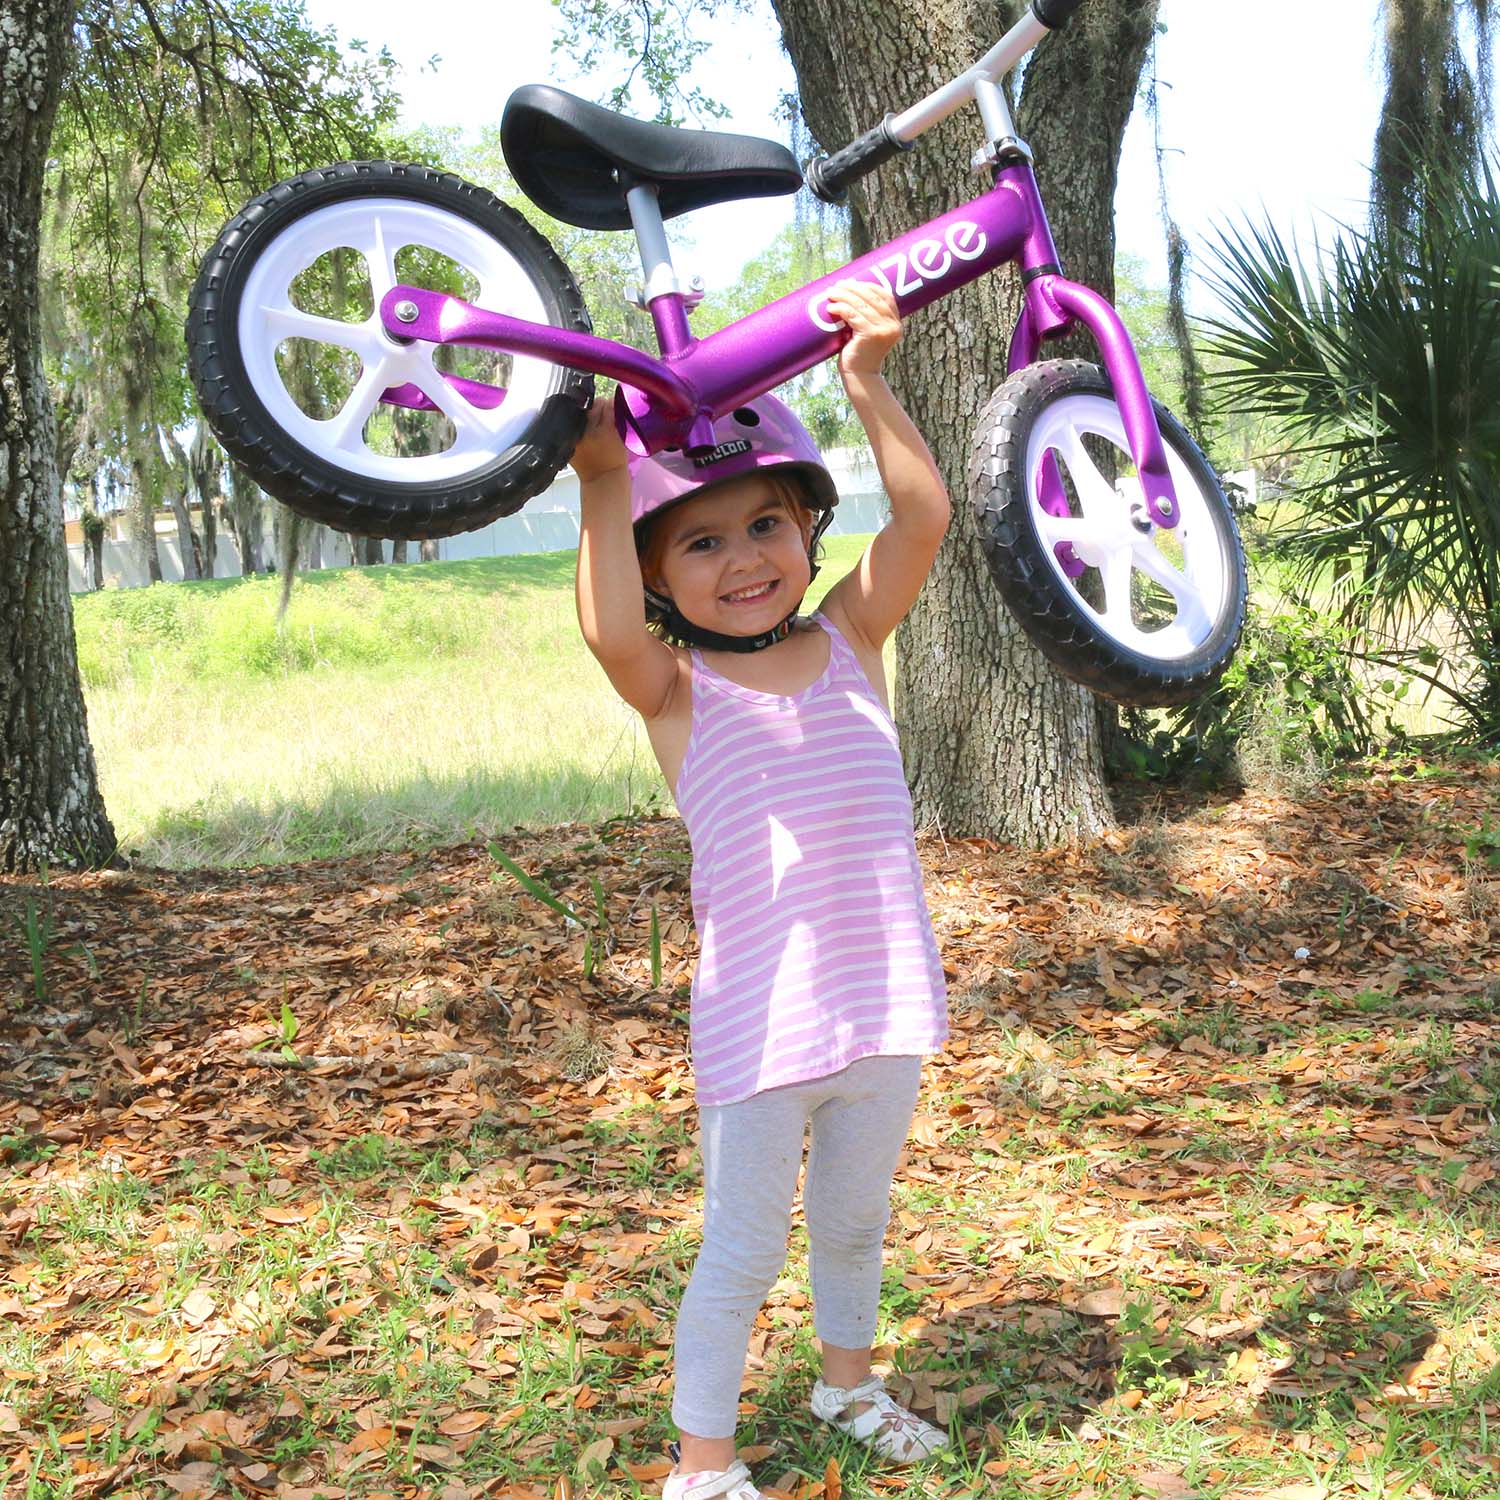 Cruzee Two Purple with White Wheels 12" Aluminium Balance Bike 